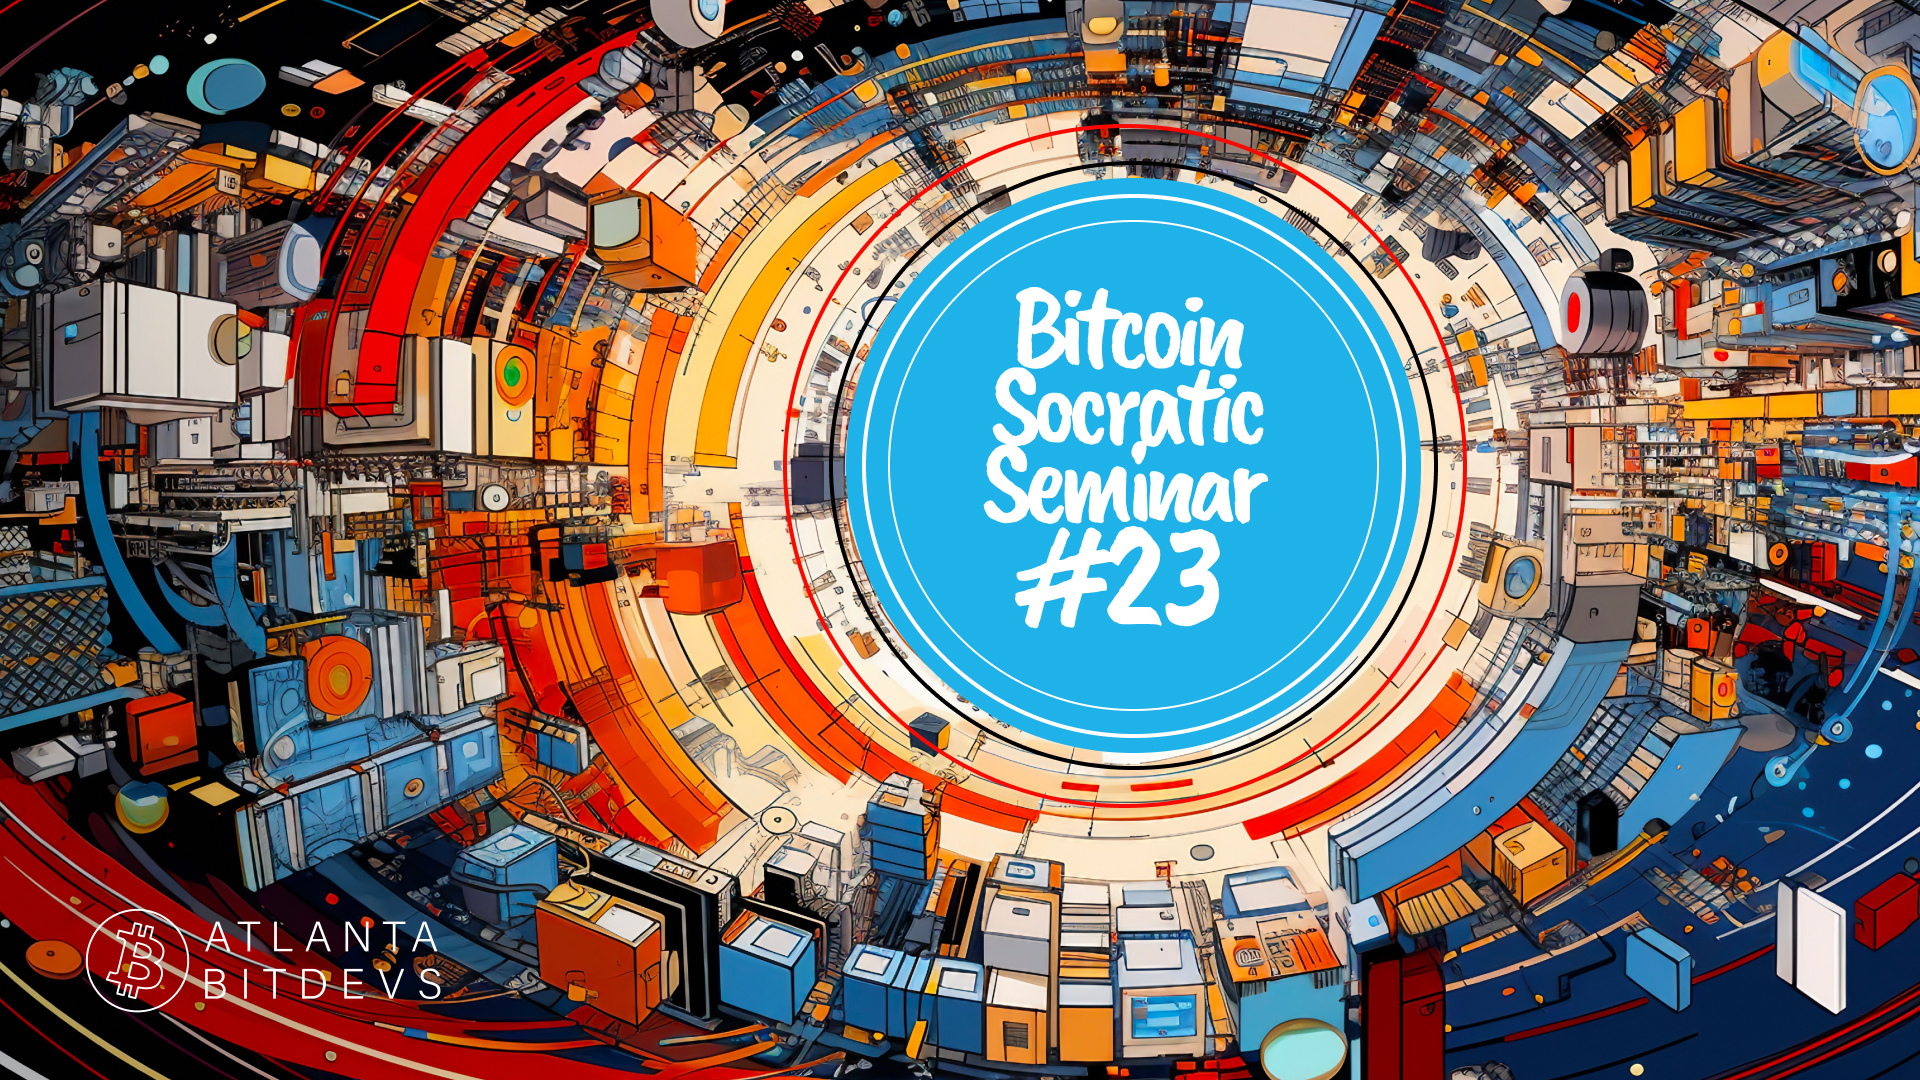 Bitcoin Socratic Seminar #23